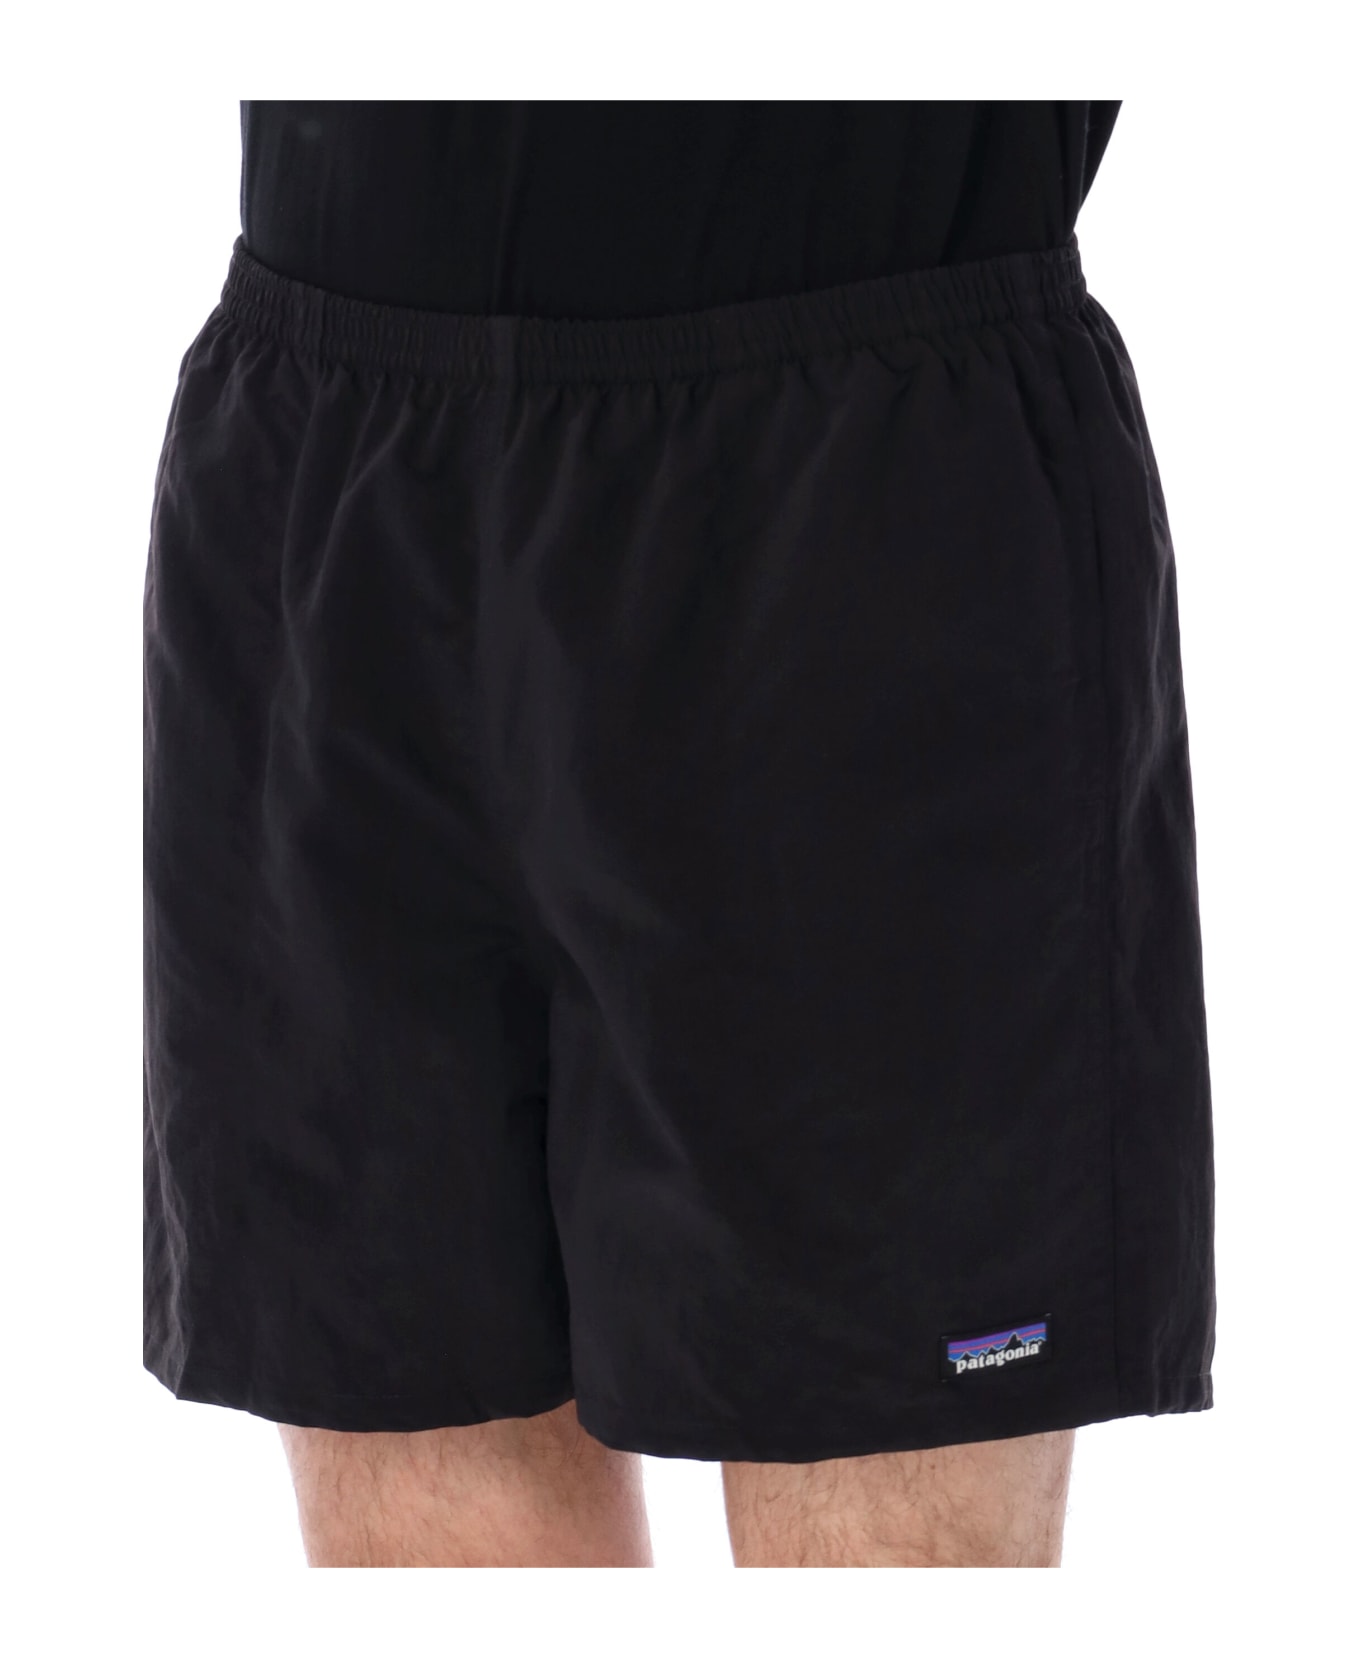 Patagonia Baggies Shorts - 5" - BLACK